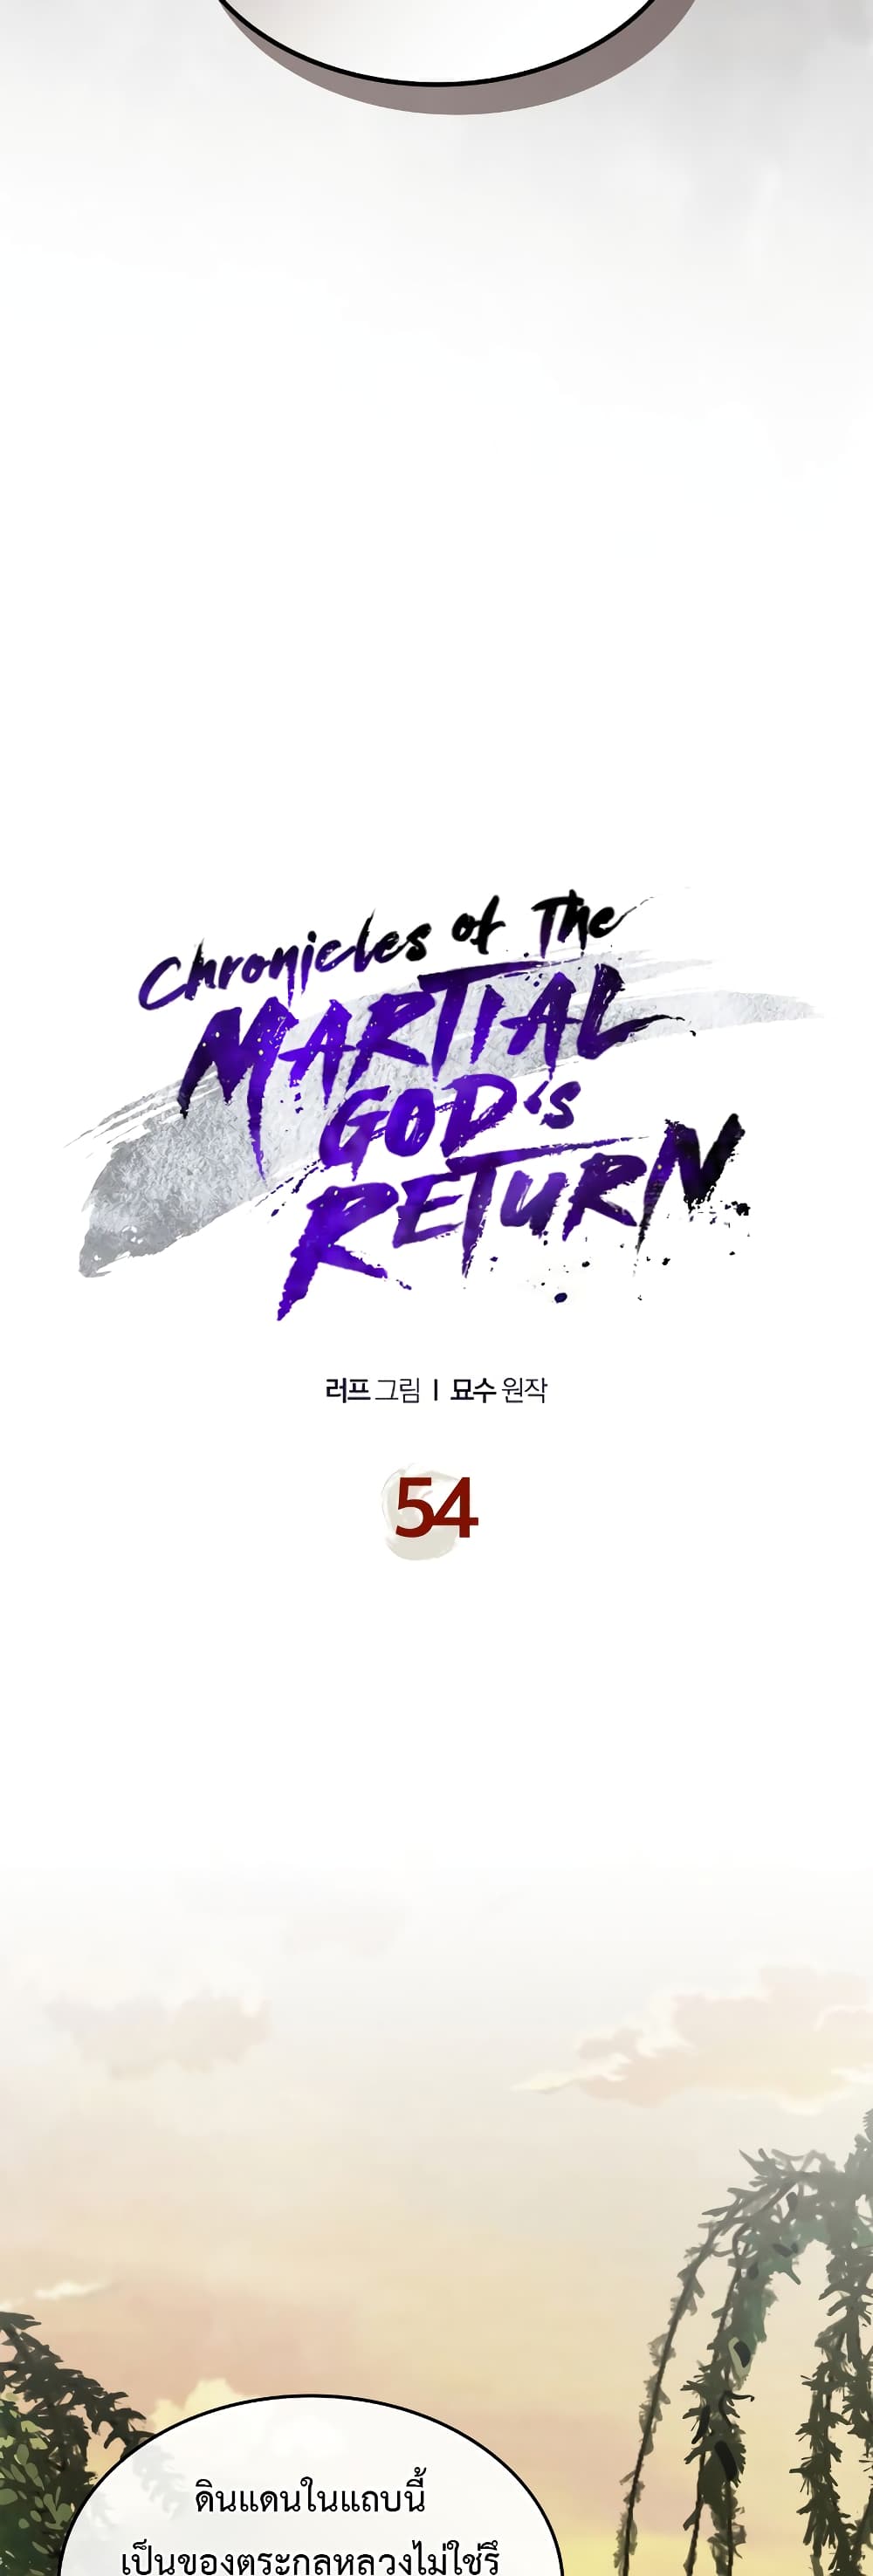 Chronicles Of The Martial God's Return 54-54